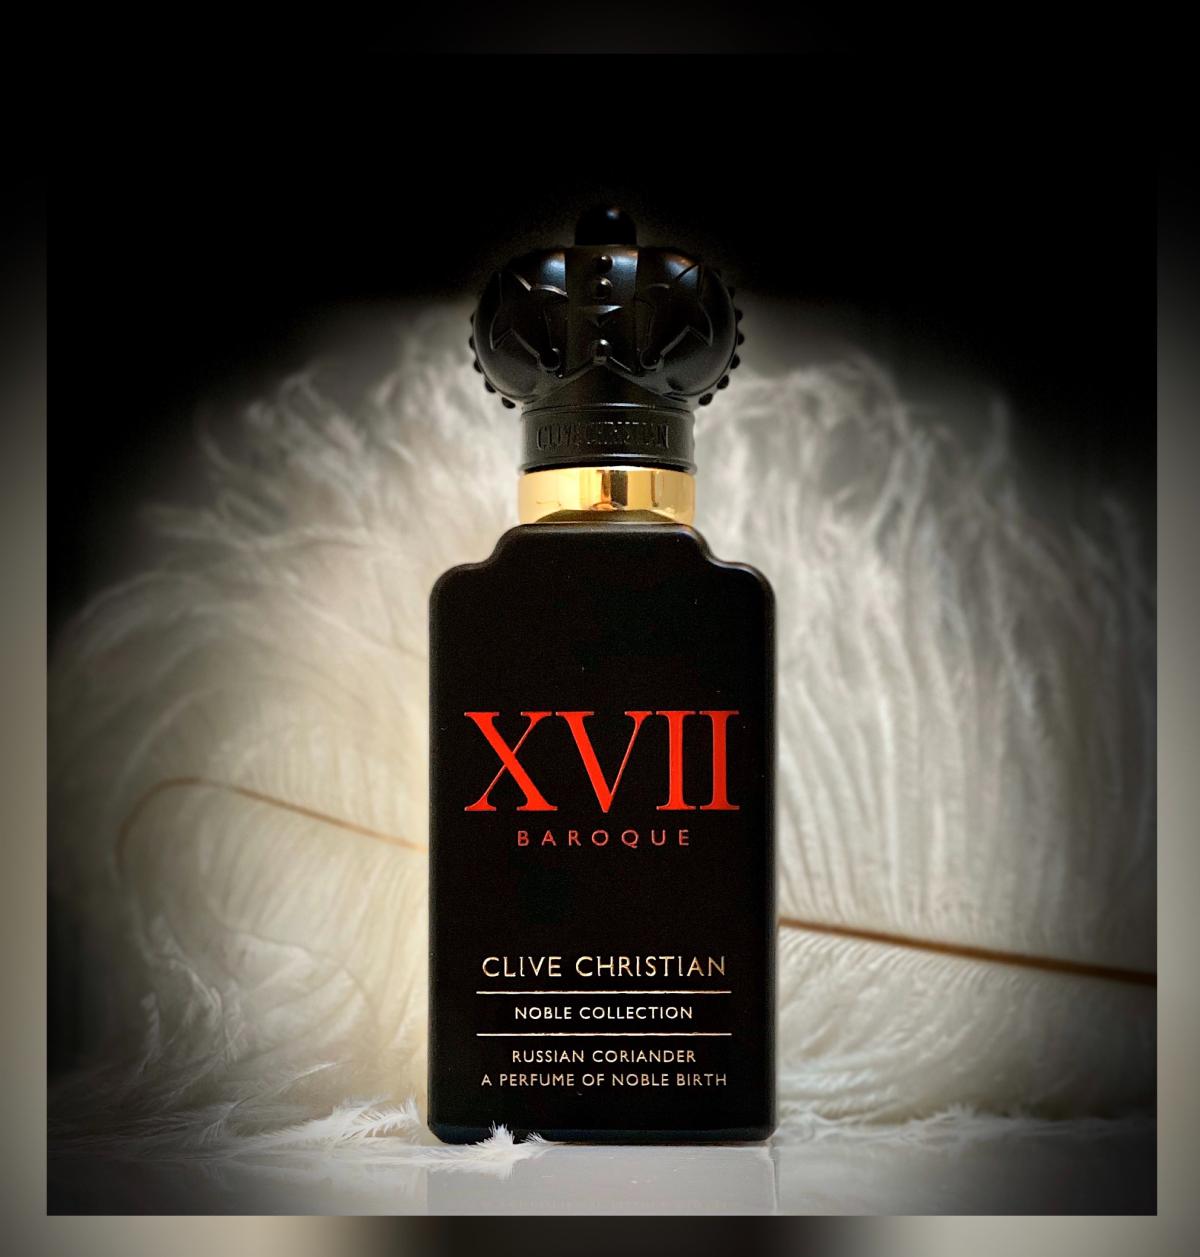 XVII Baroque Russian Coriander Clive Christian cologne - a fragrance ...